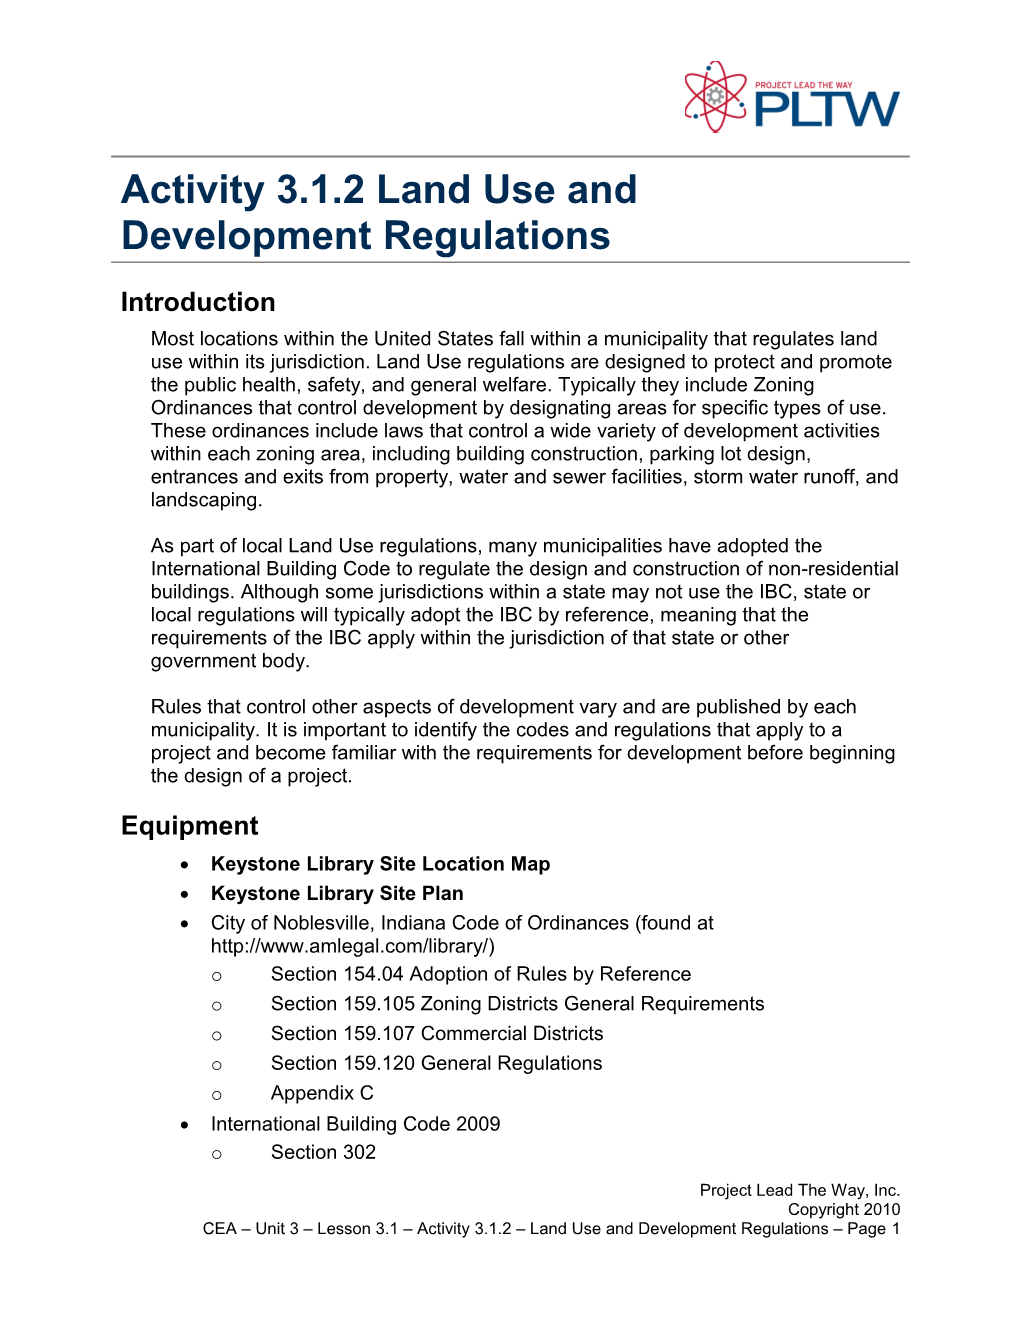 Activity 3.1.2 Land Use and Development Regulations